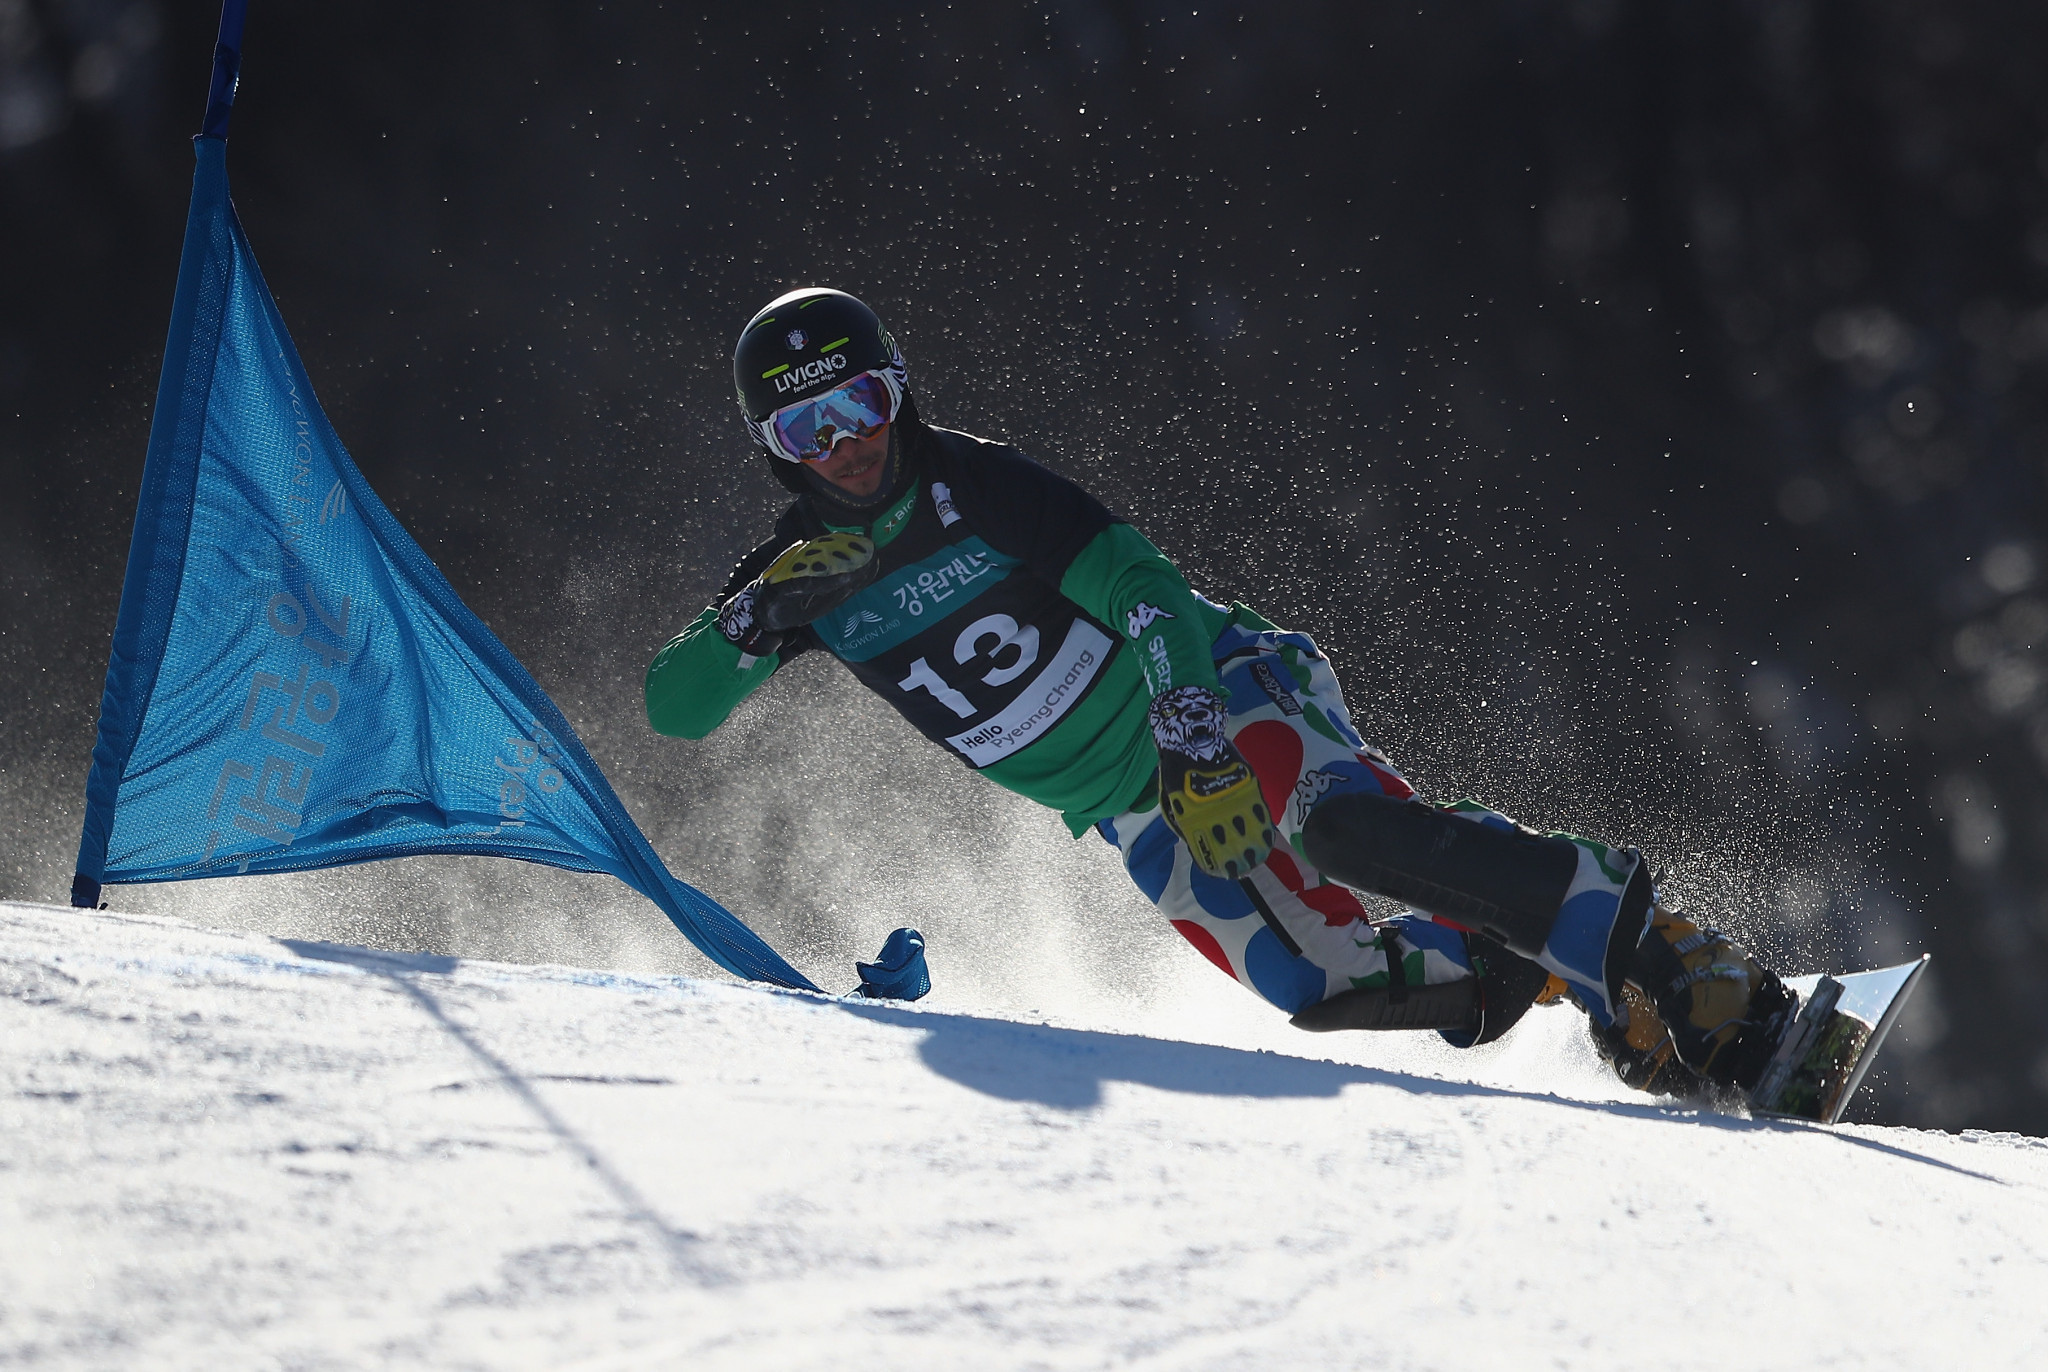 Maurizio Bormolini won the men's parallel slalom today ©Getty Images